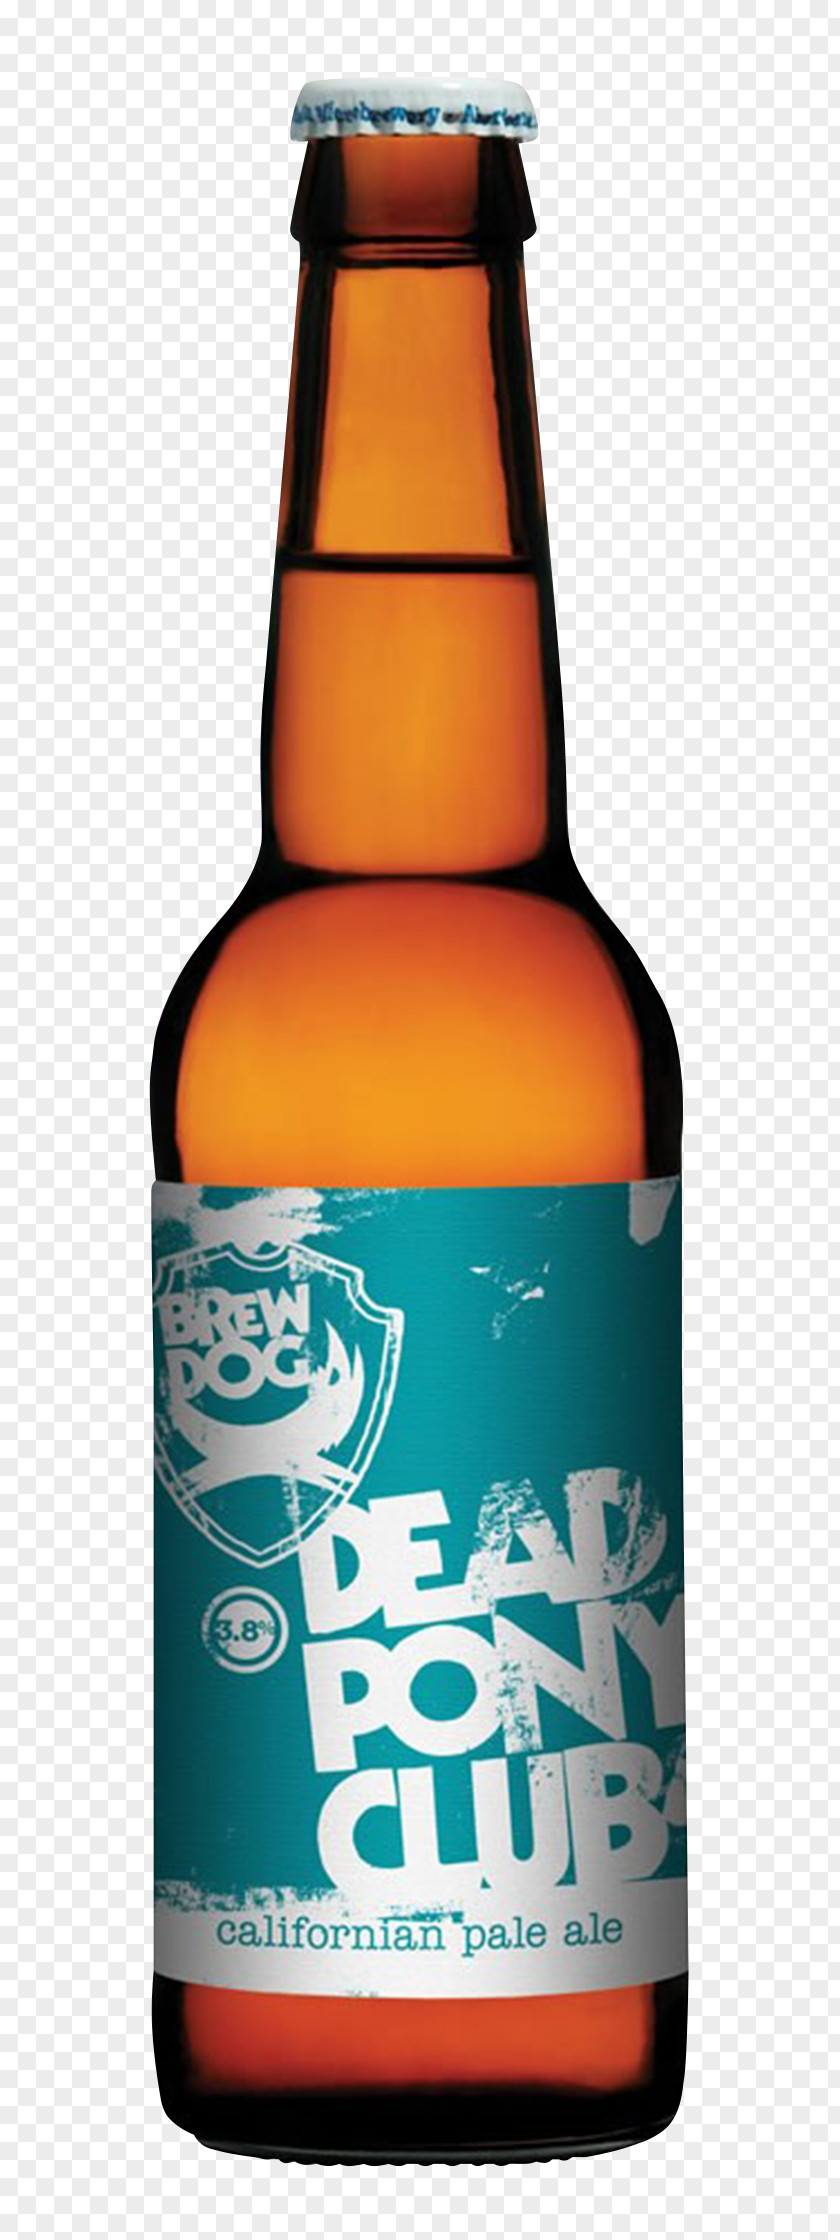 Beer BrewDog Pale Ale Stout PNG